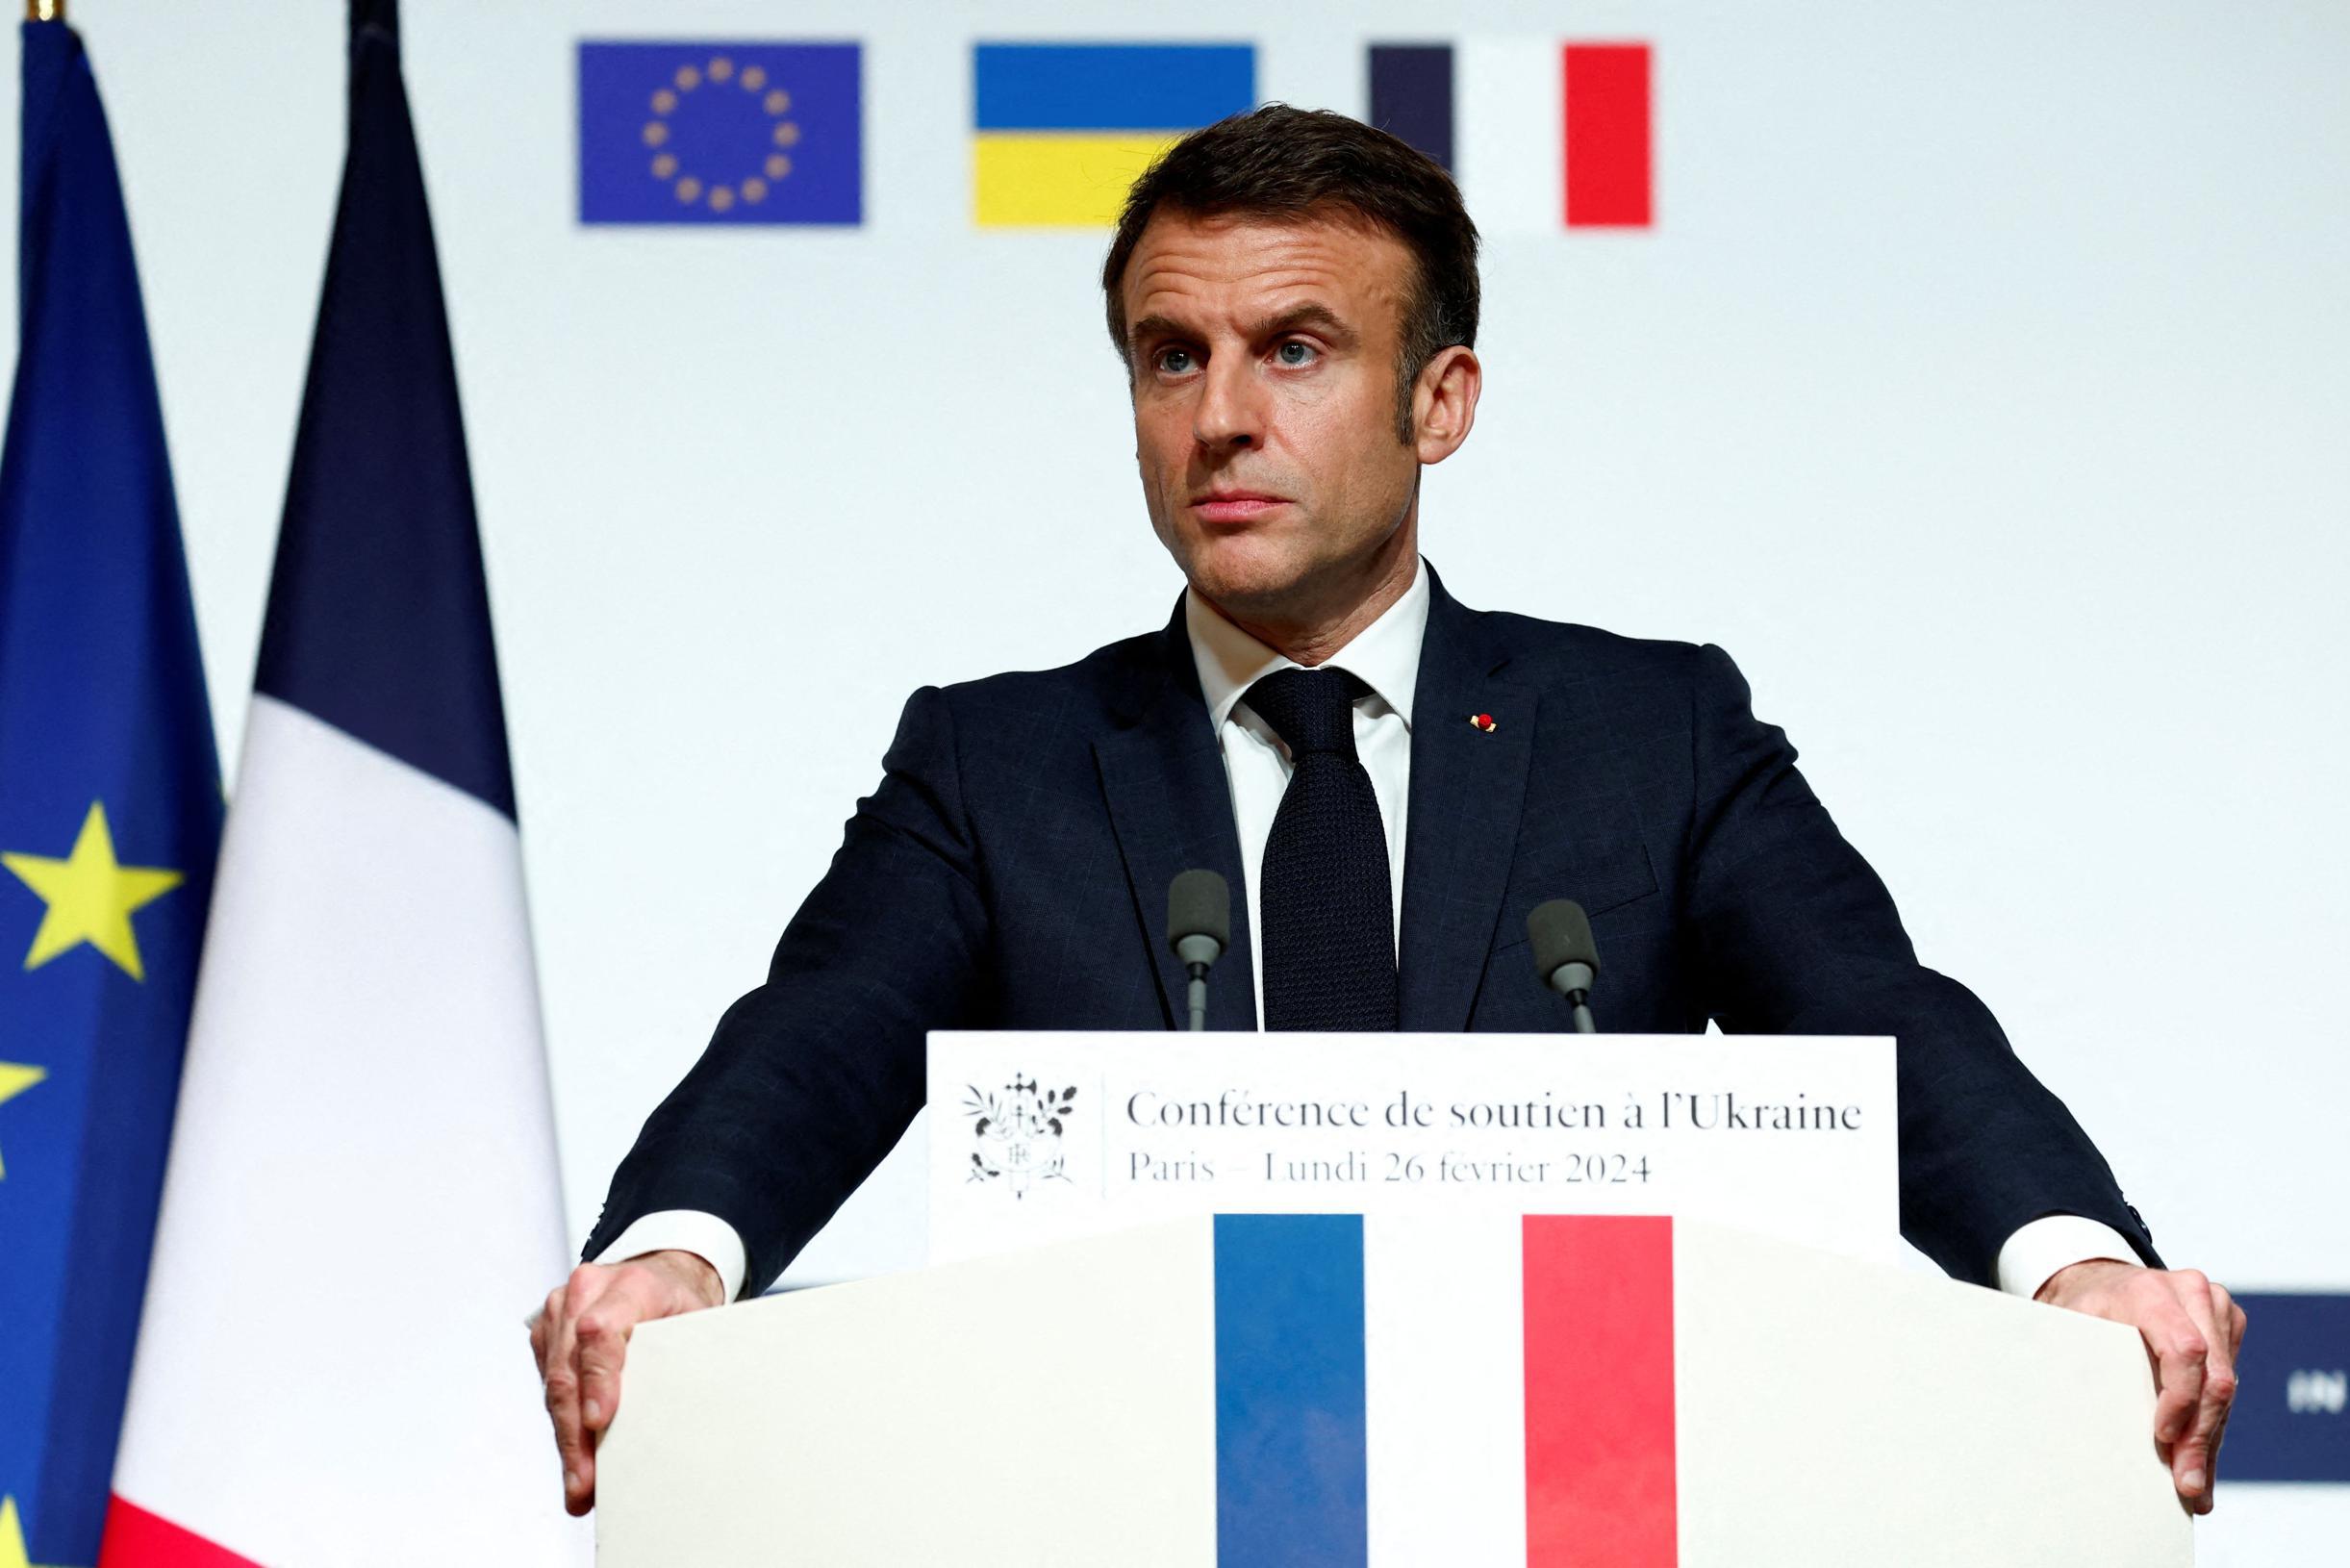 Macron introduces legislation regarding euthanasia